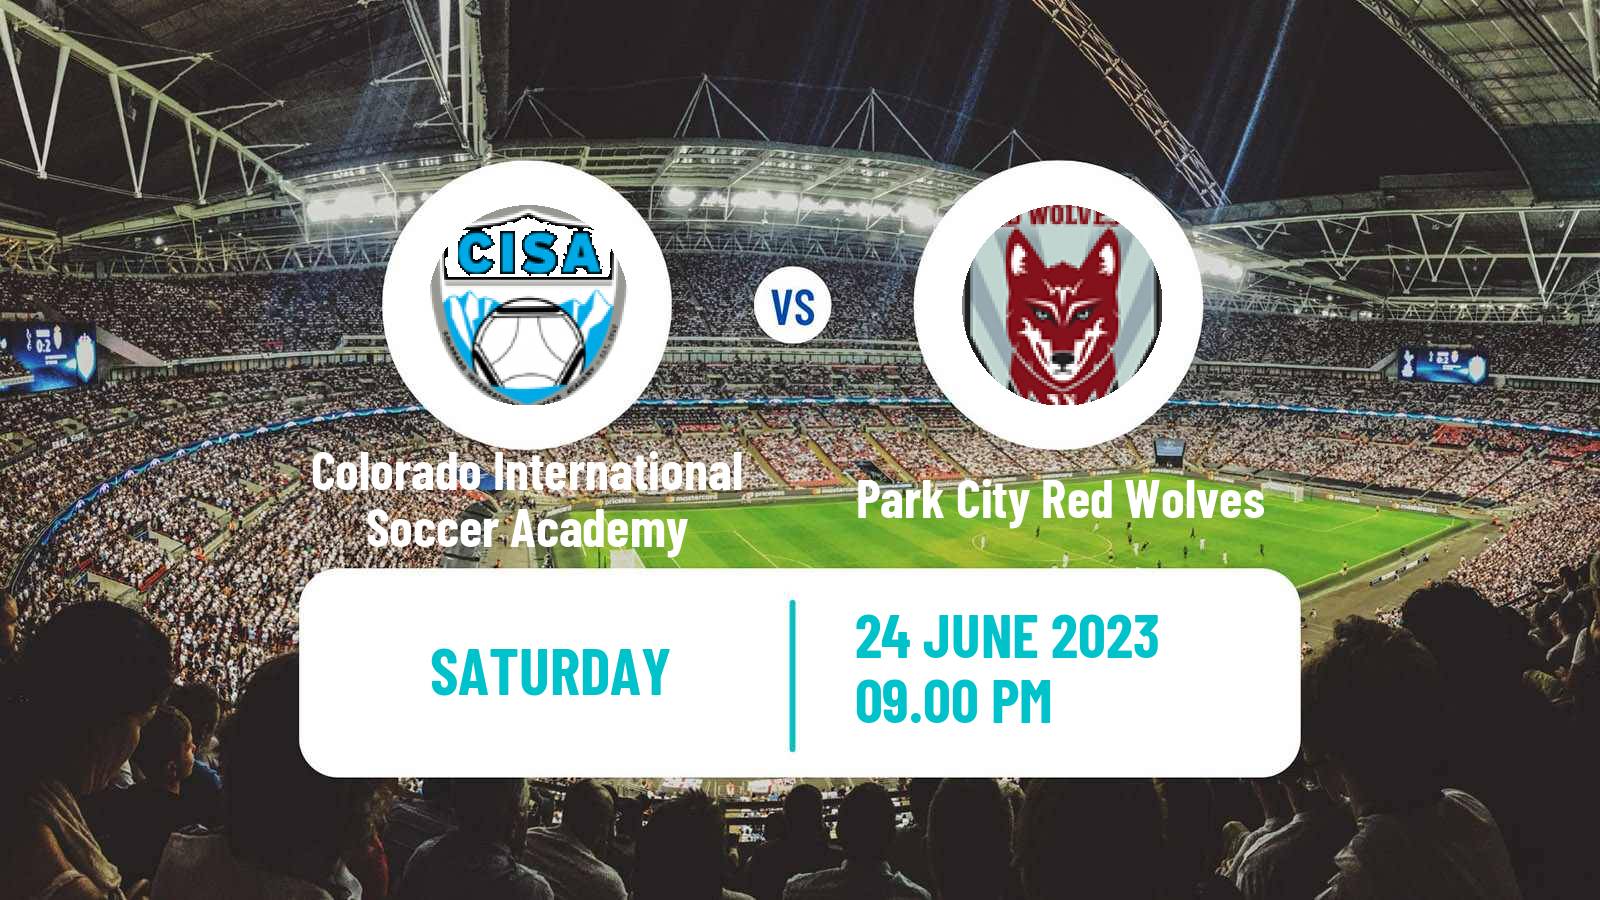 Soccer USL League Two Colorado International Soccer Academy - Park City Red Wolves